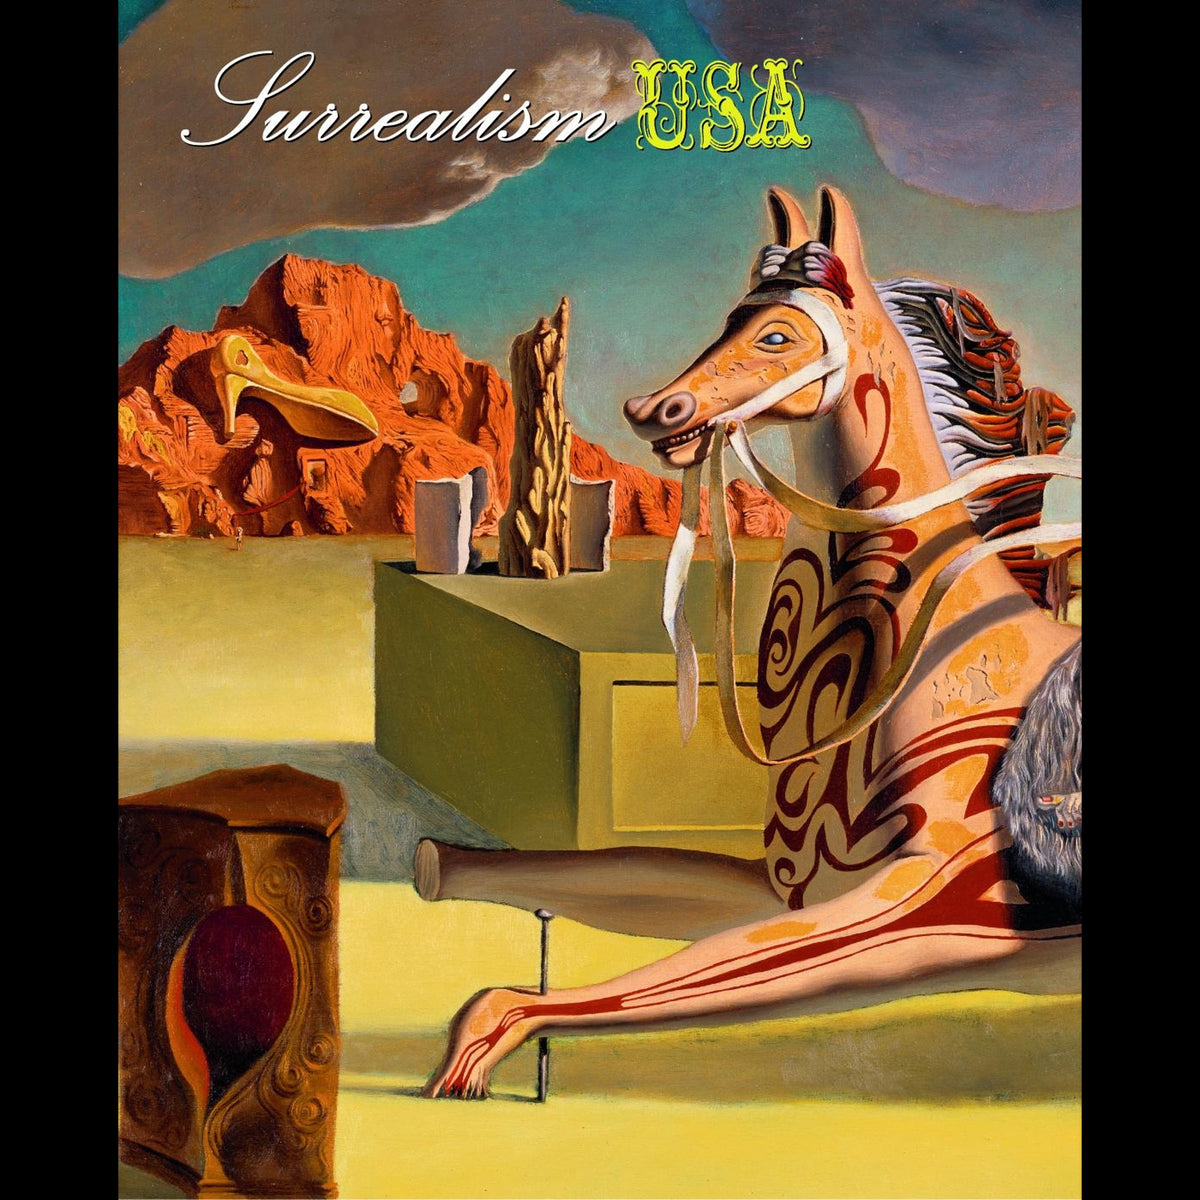 Coverbild Surrealism USA